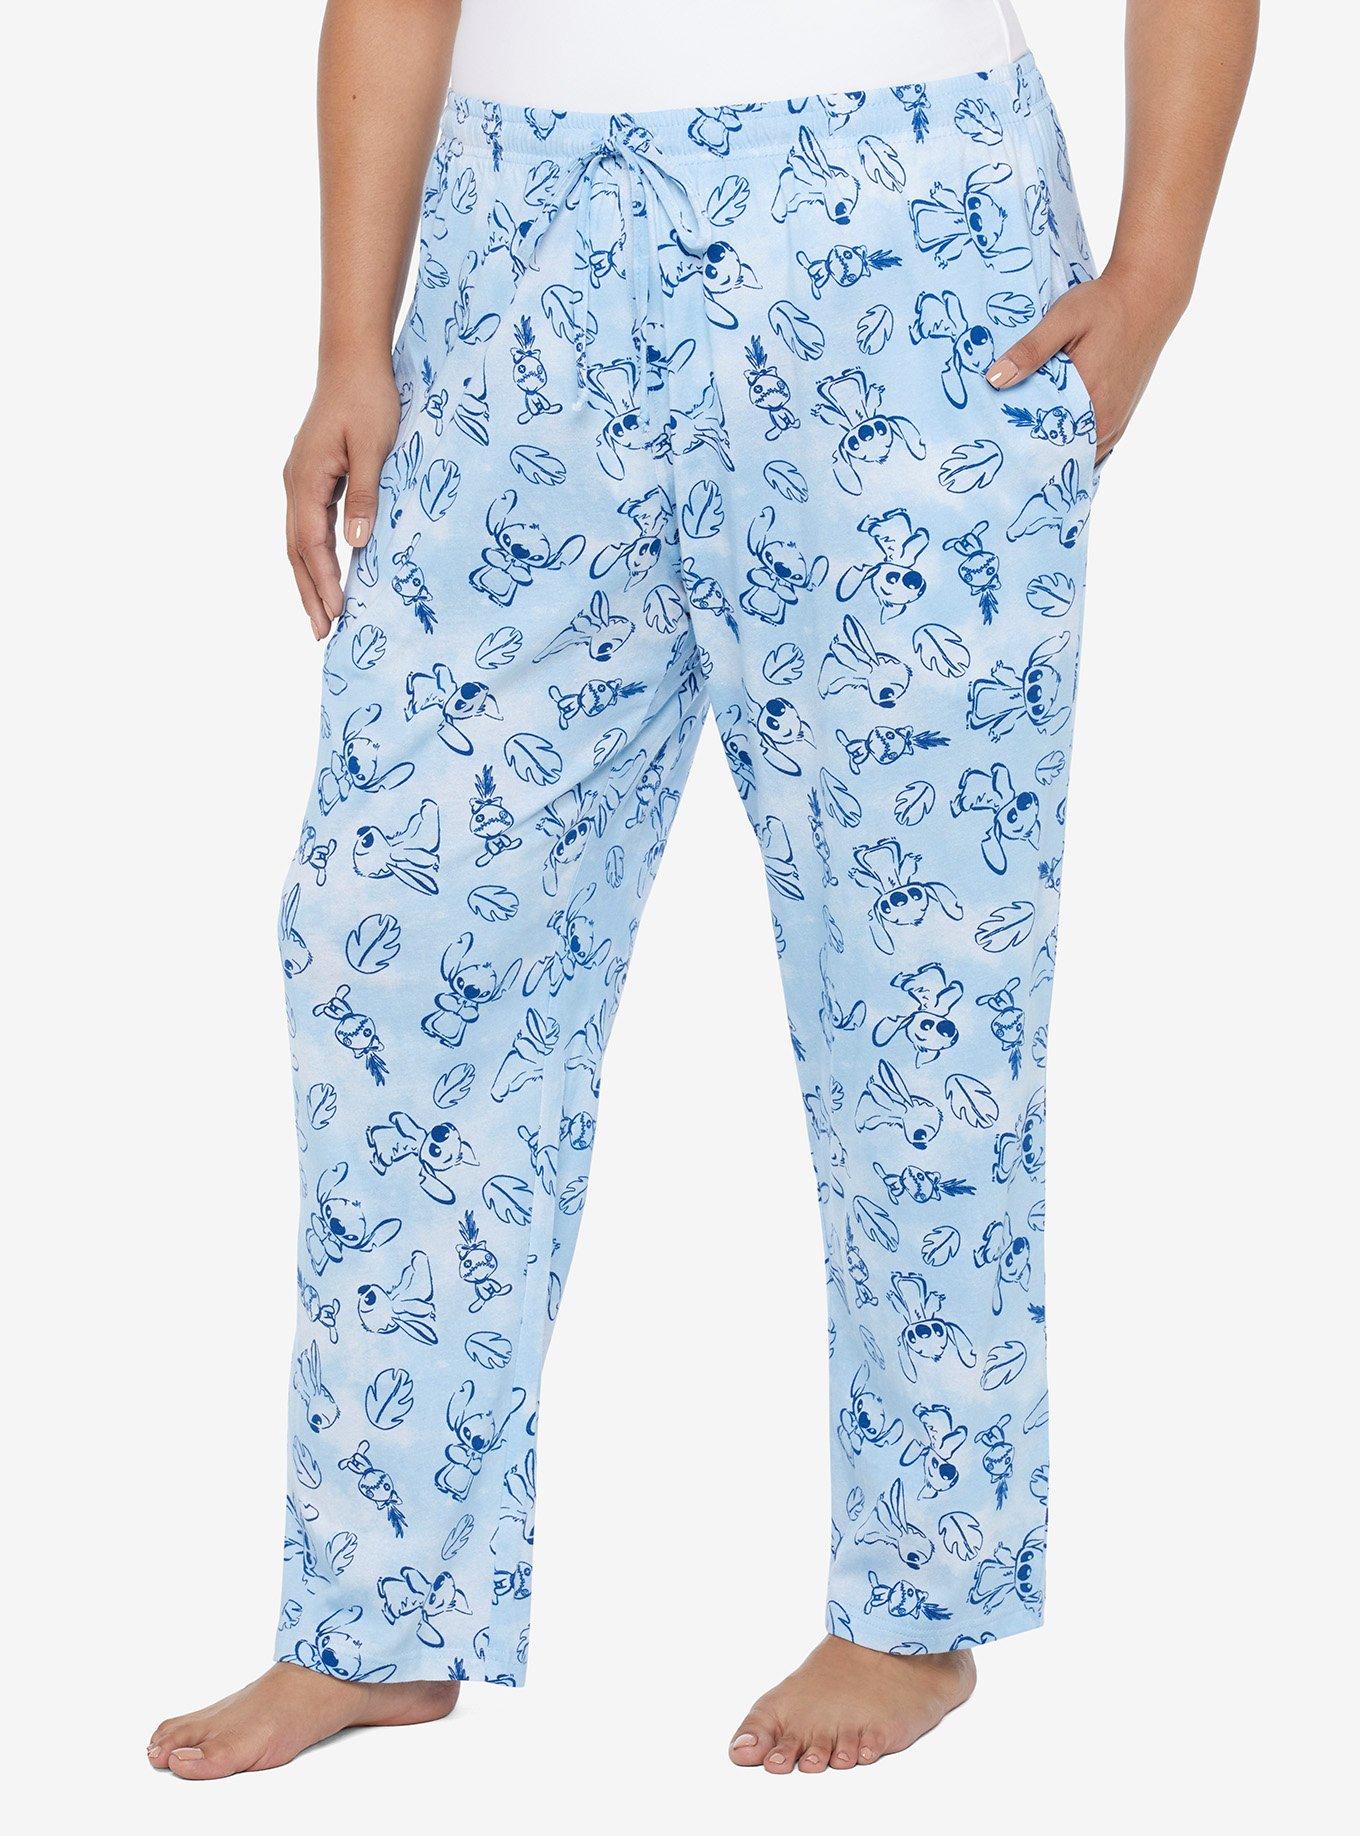 NWT Womens Disney Lilo and Stitch Pajama Pants Sleep Scrump Plus